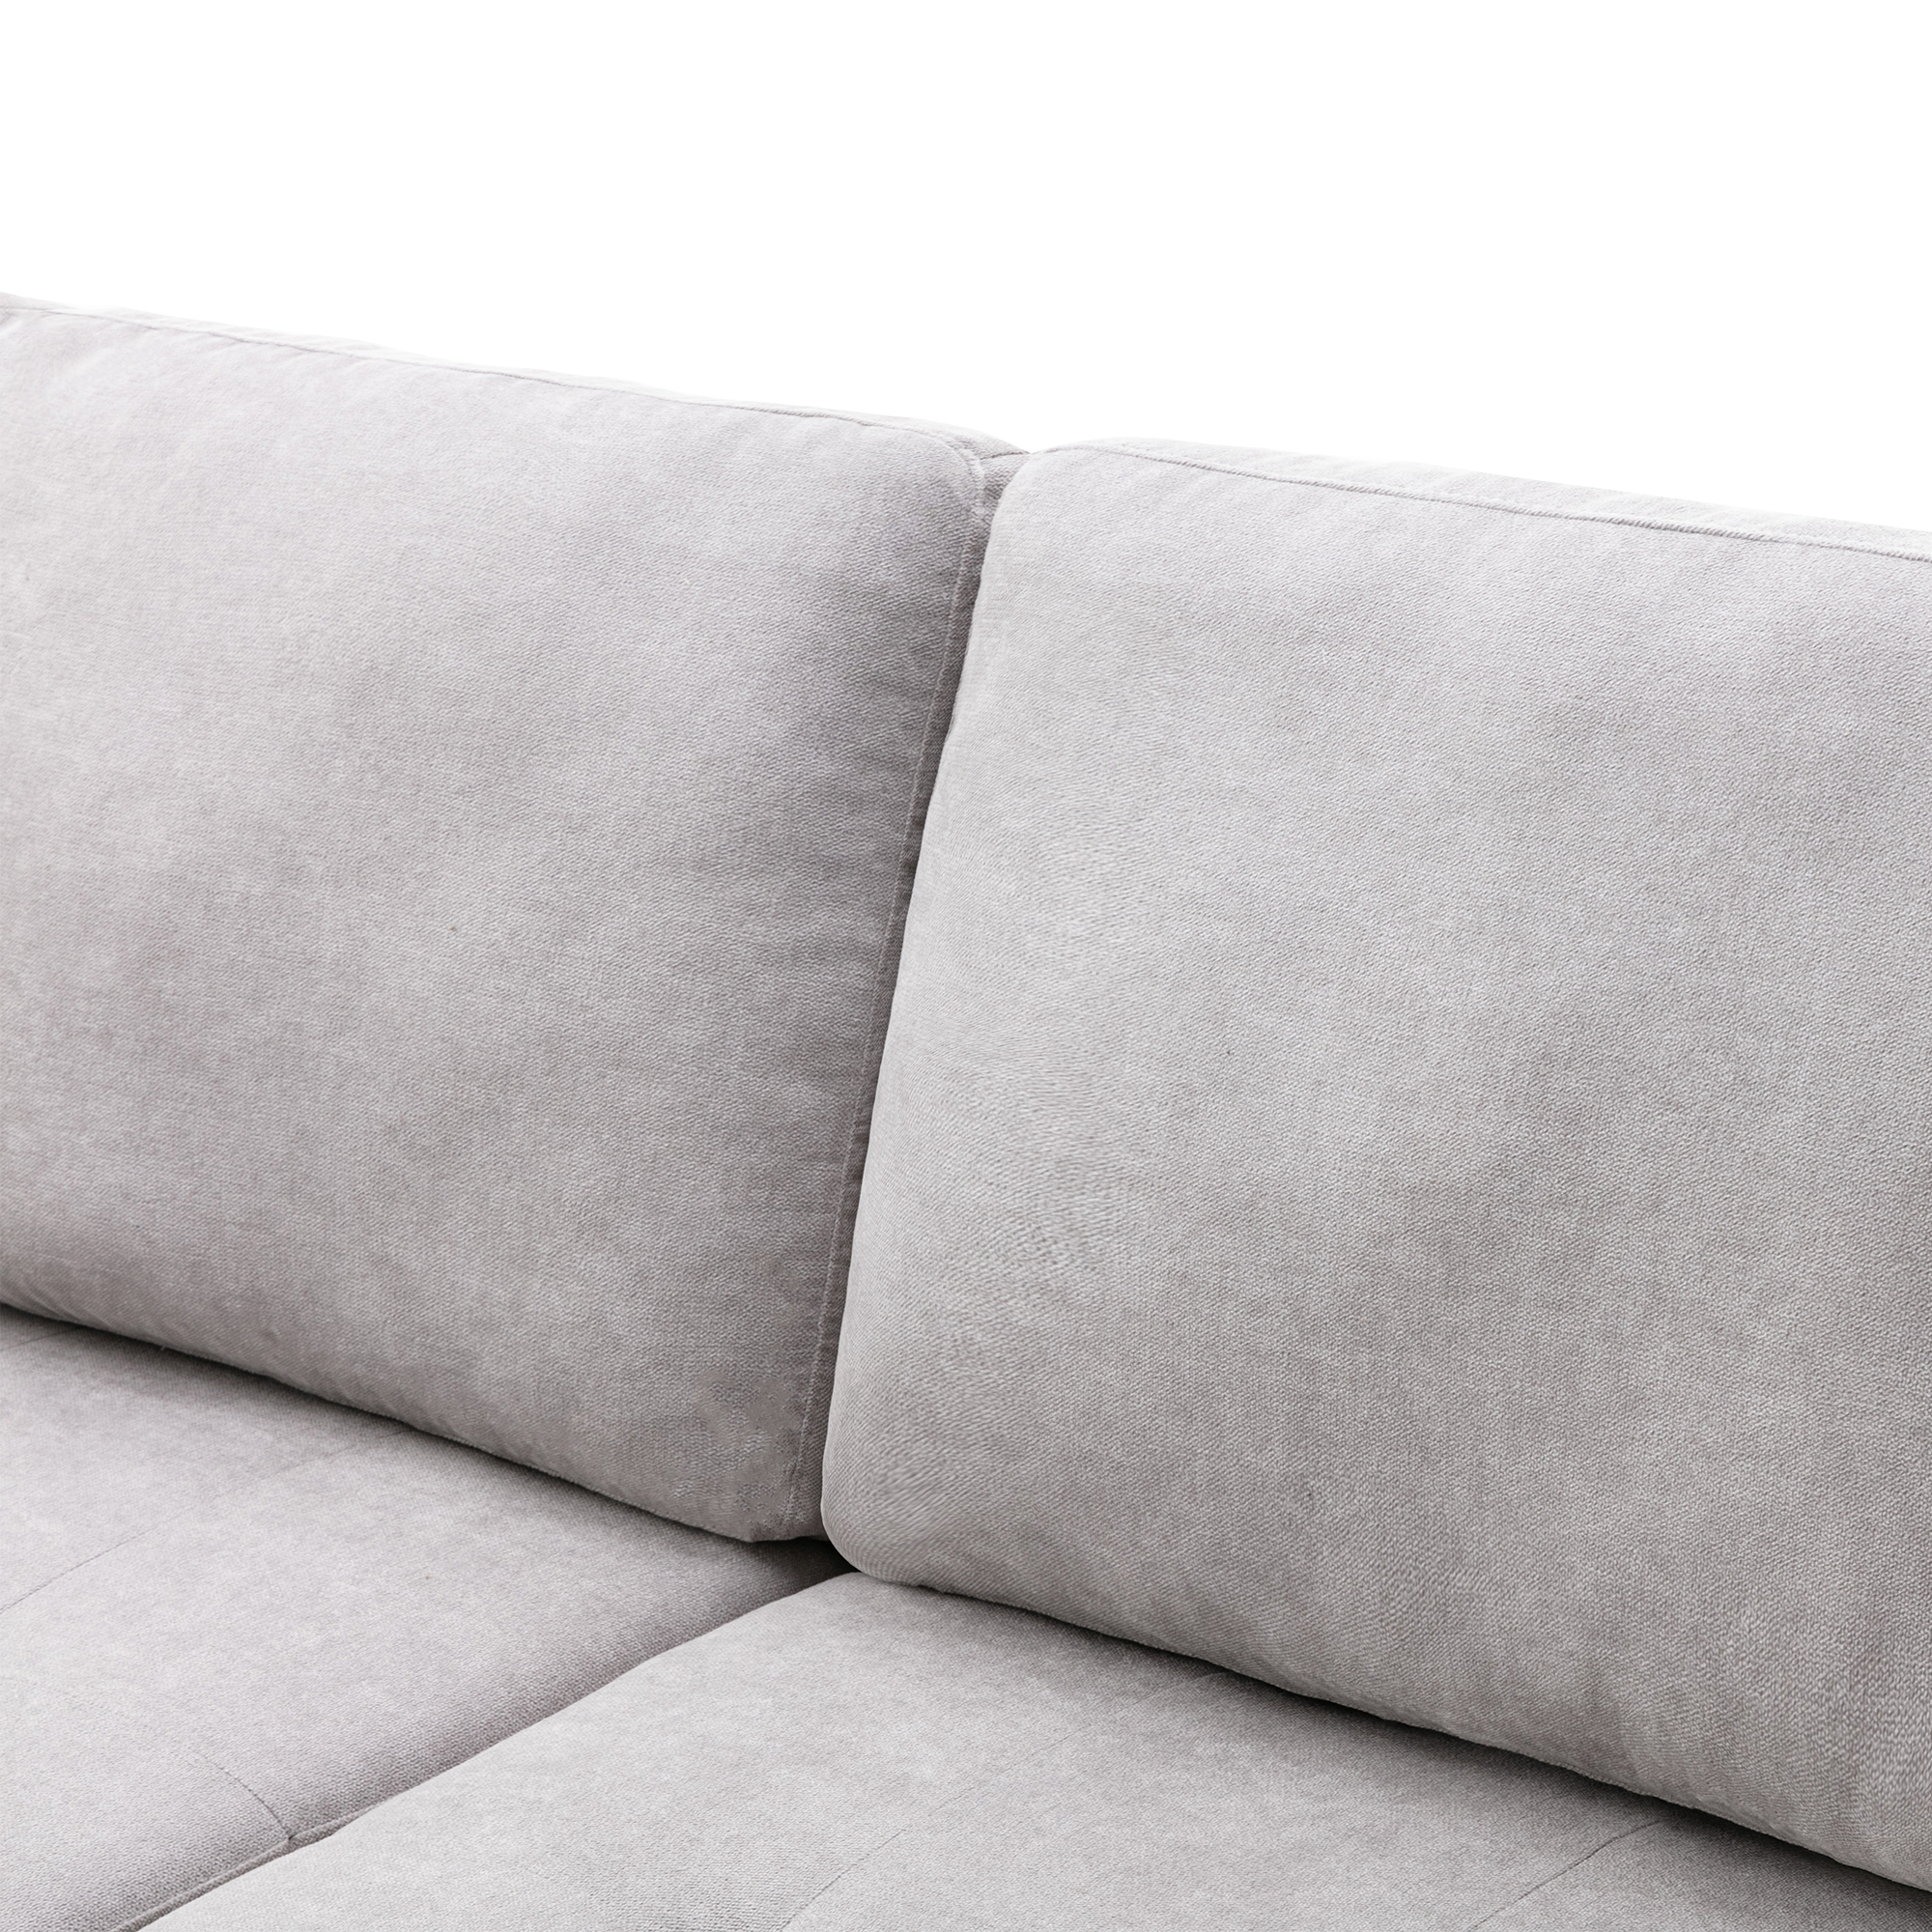 86" Sleeper Sectional Sofa with Ottoman, Gray